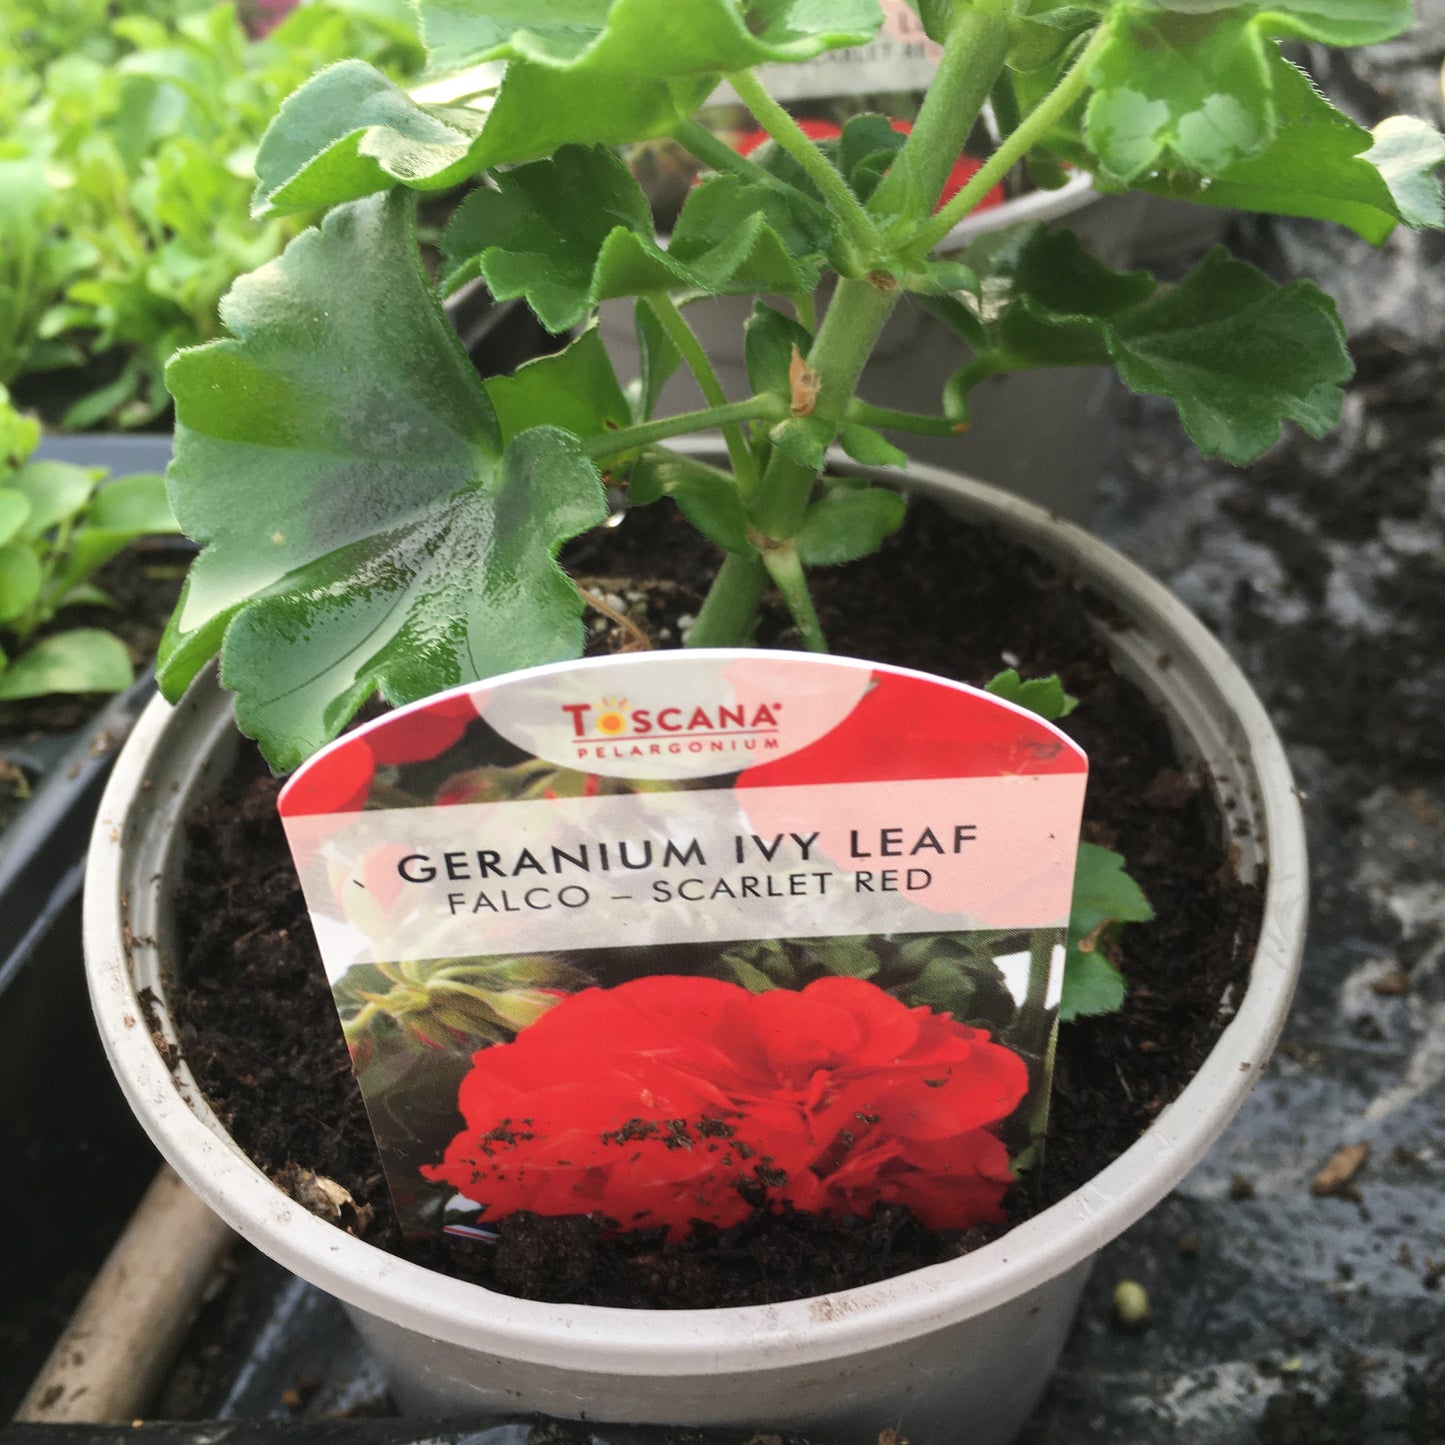 Geranium - Ivy leaf